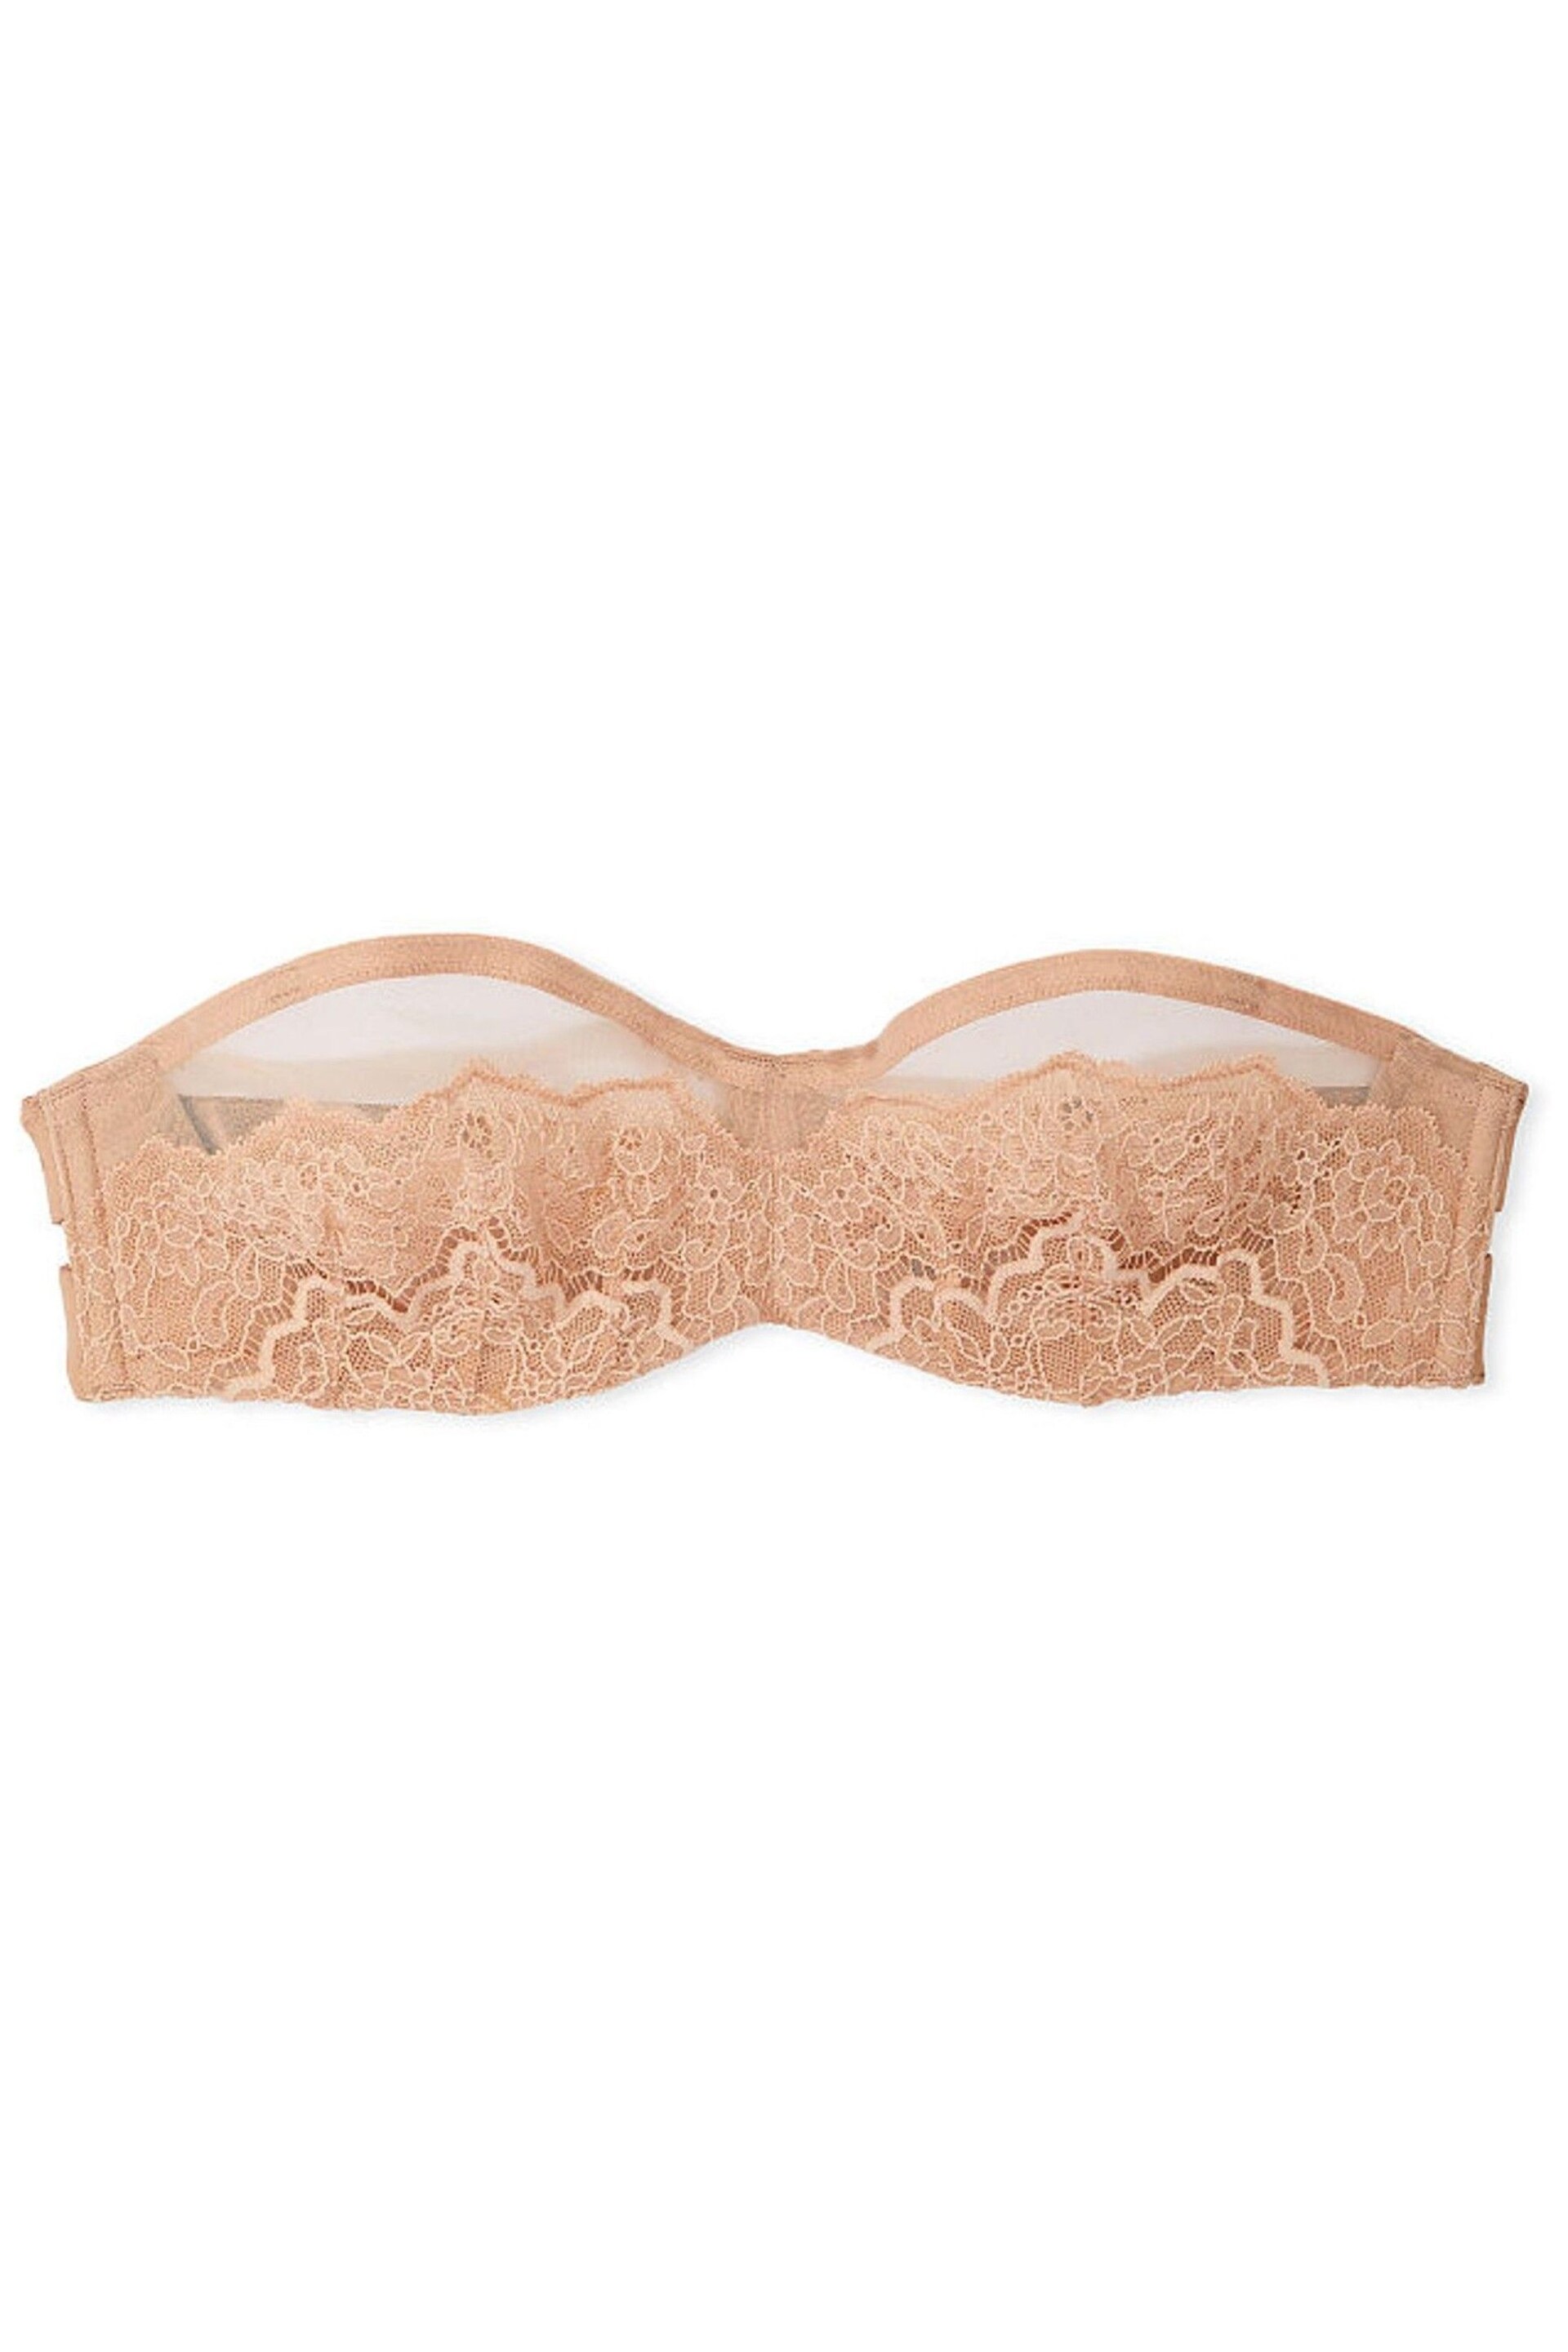 Victoria's Secret Praline Nude Strapless Lace Balcony Minimiser Bra - Image 3 of 5